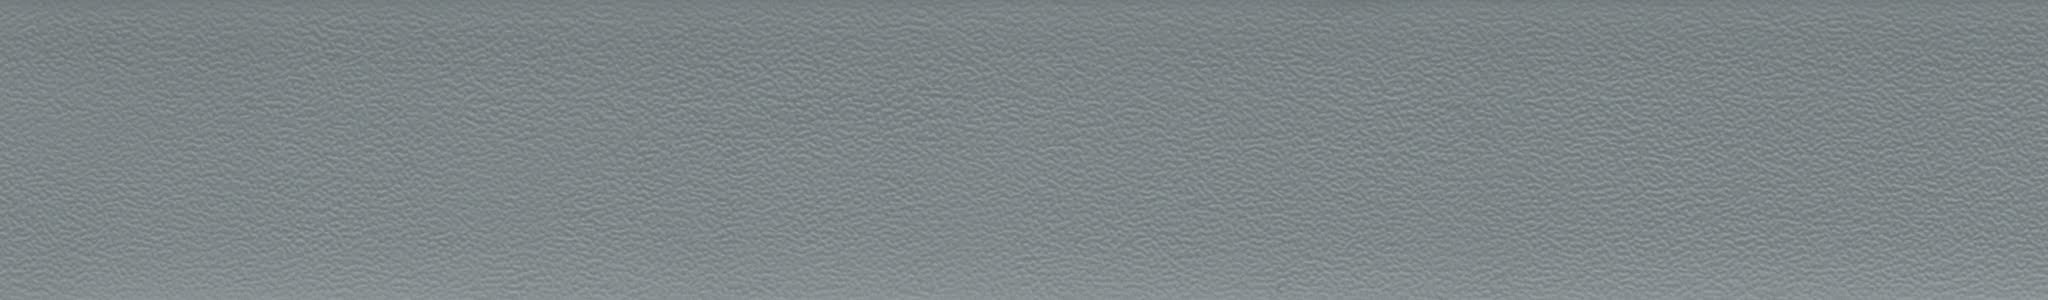 ABS 0162 PE Graphite Grey 23x1mm HU 172162